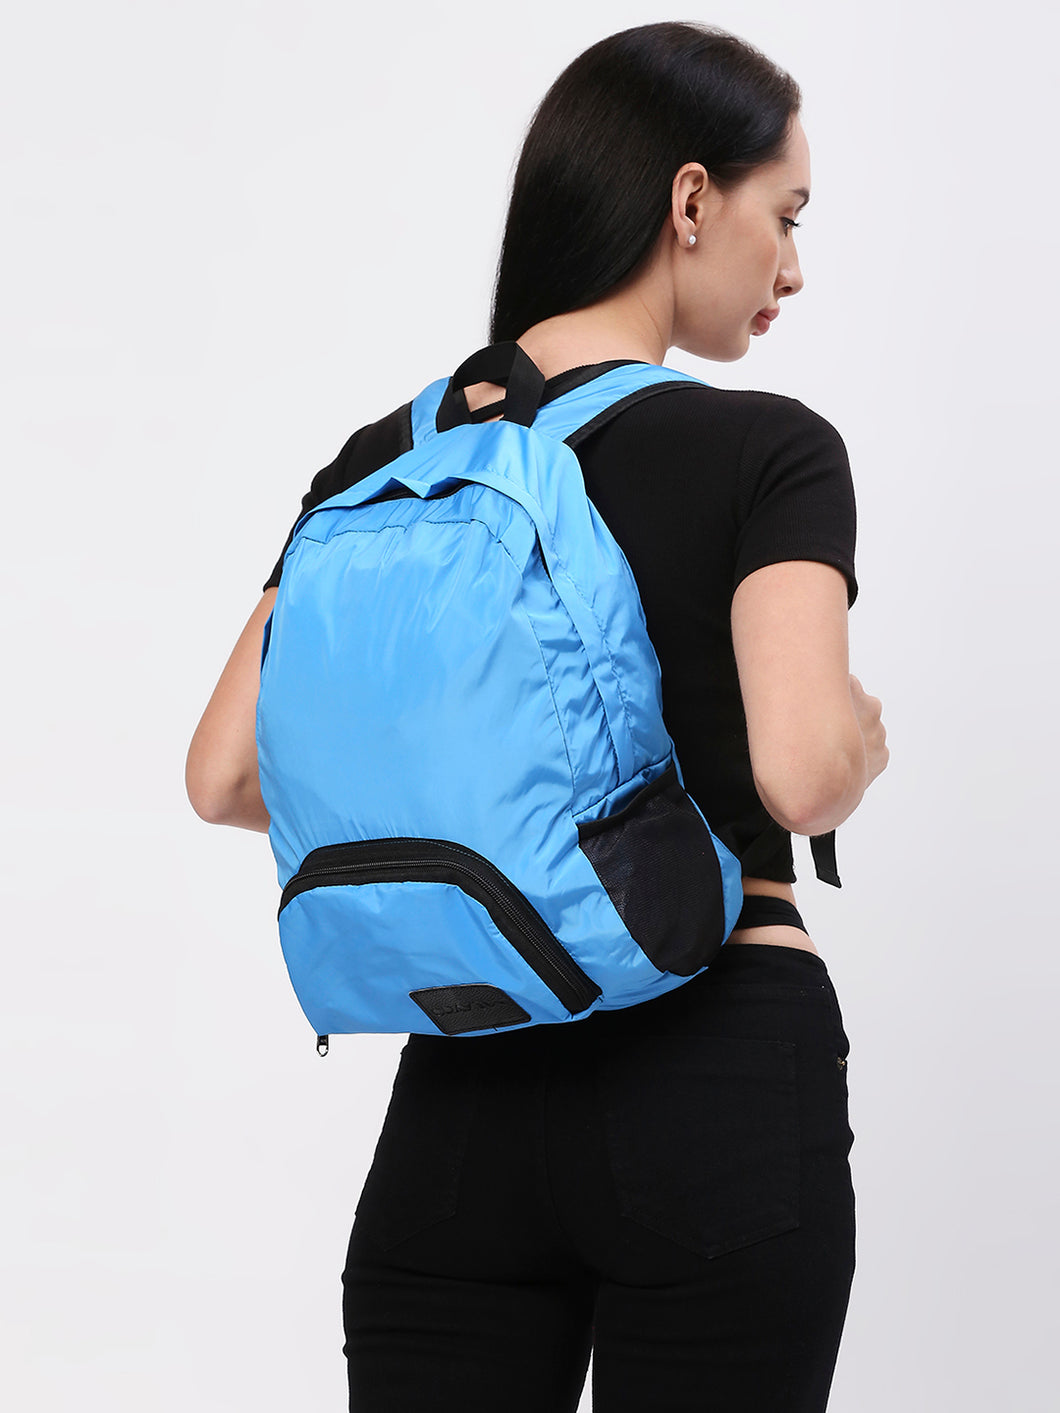 Crayton Blue Foldable Travel Backpack 15 Litres